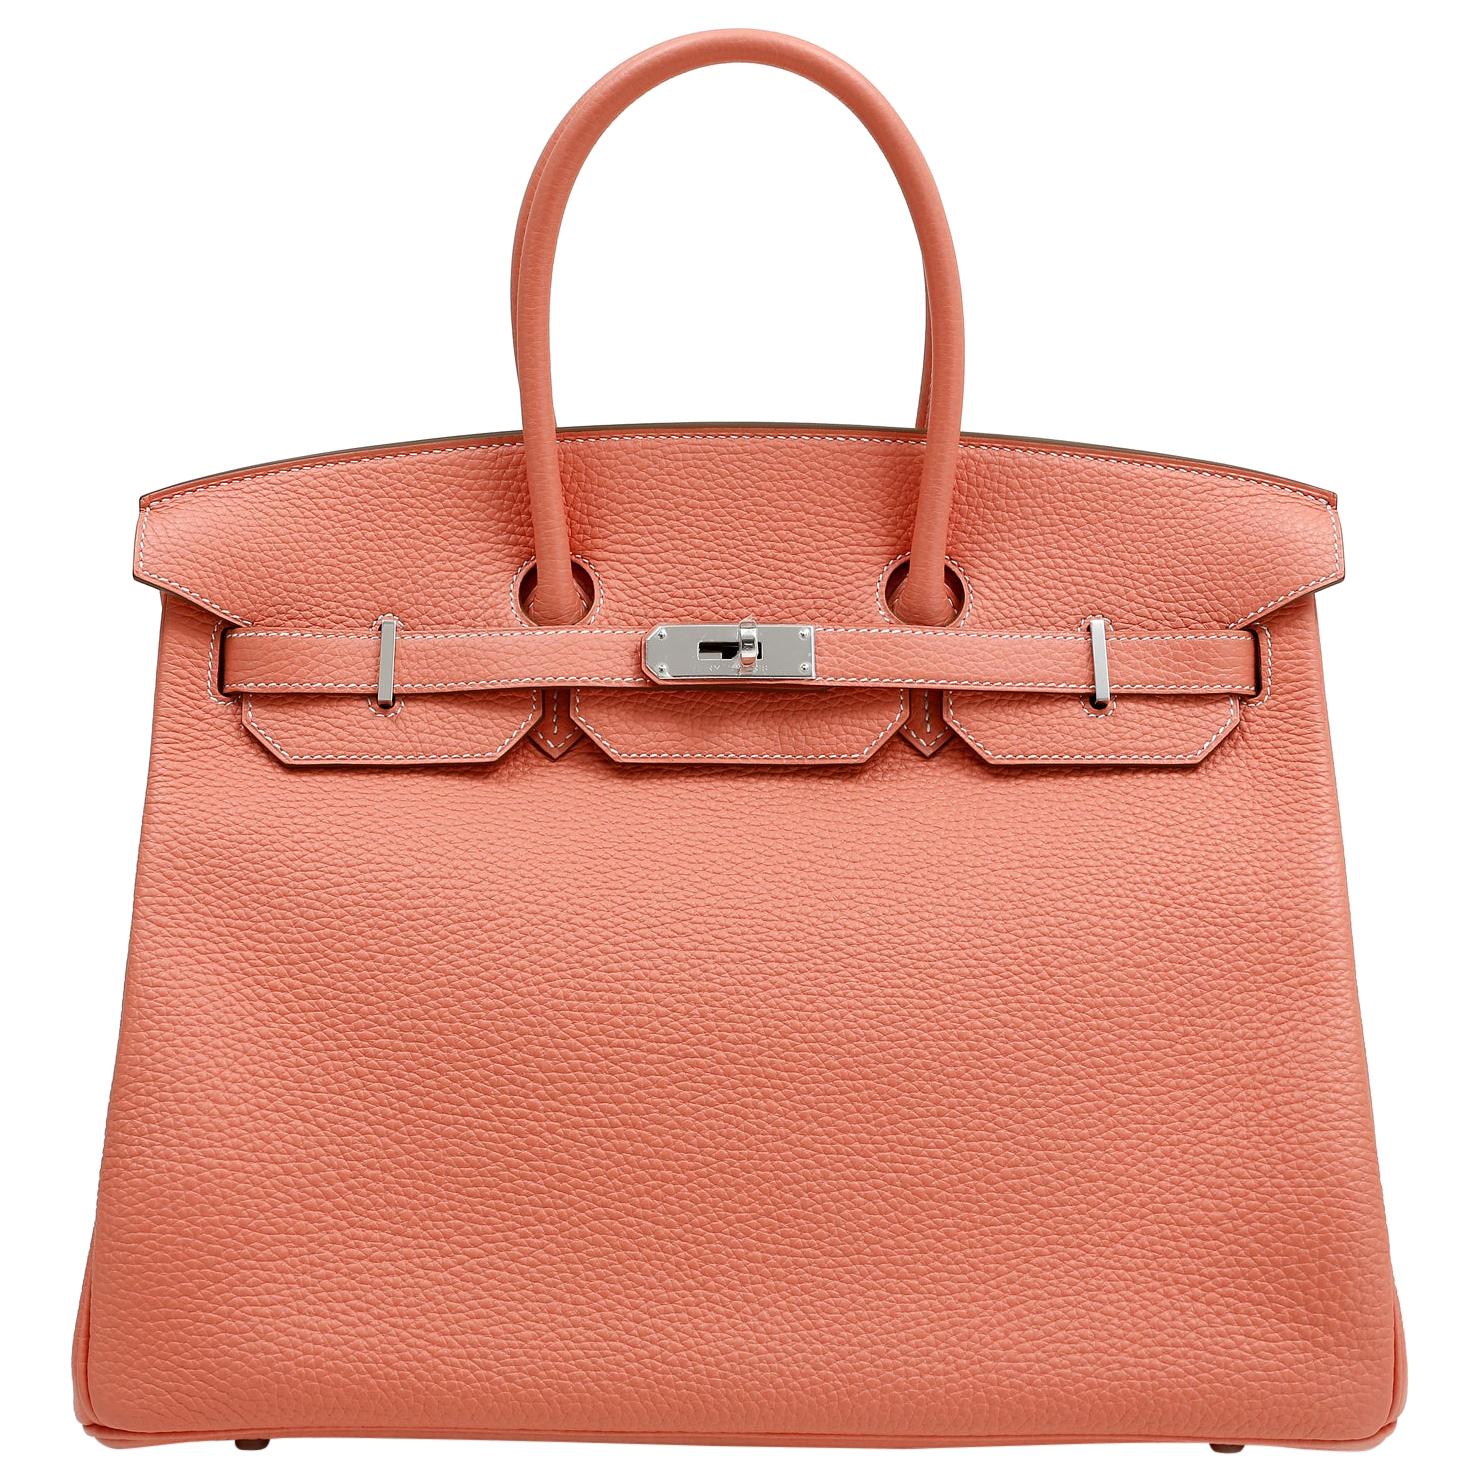 Hermès Crevette Togo 35 cm Birkin Bag